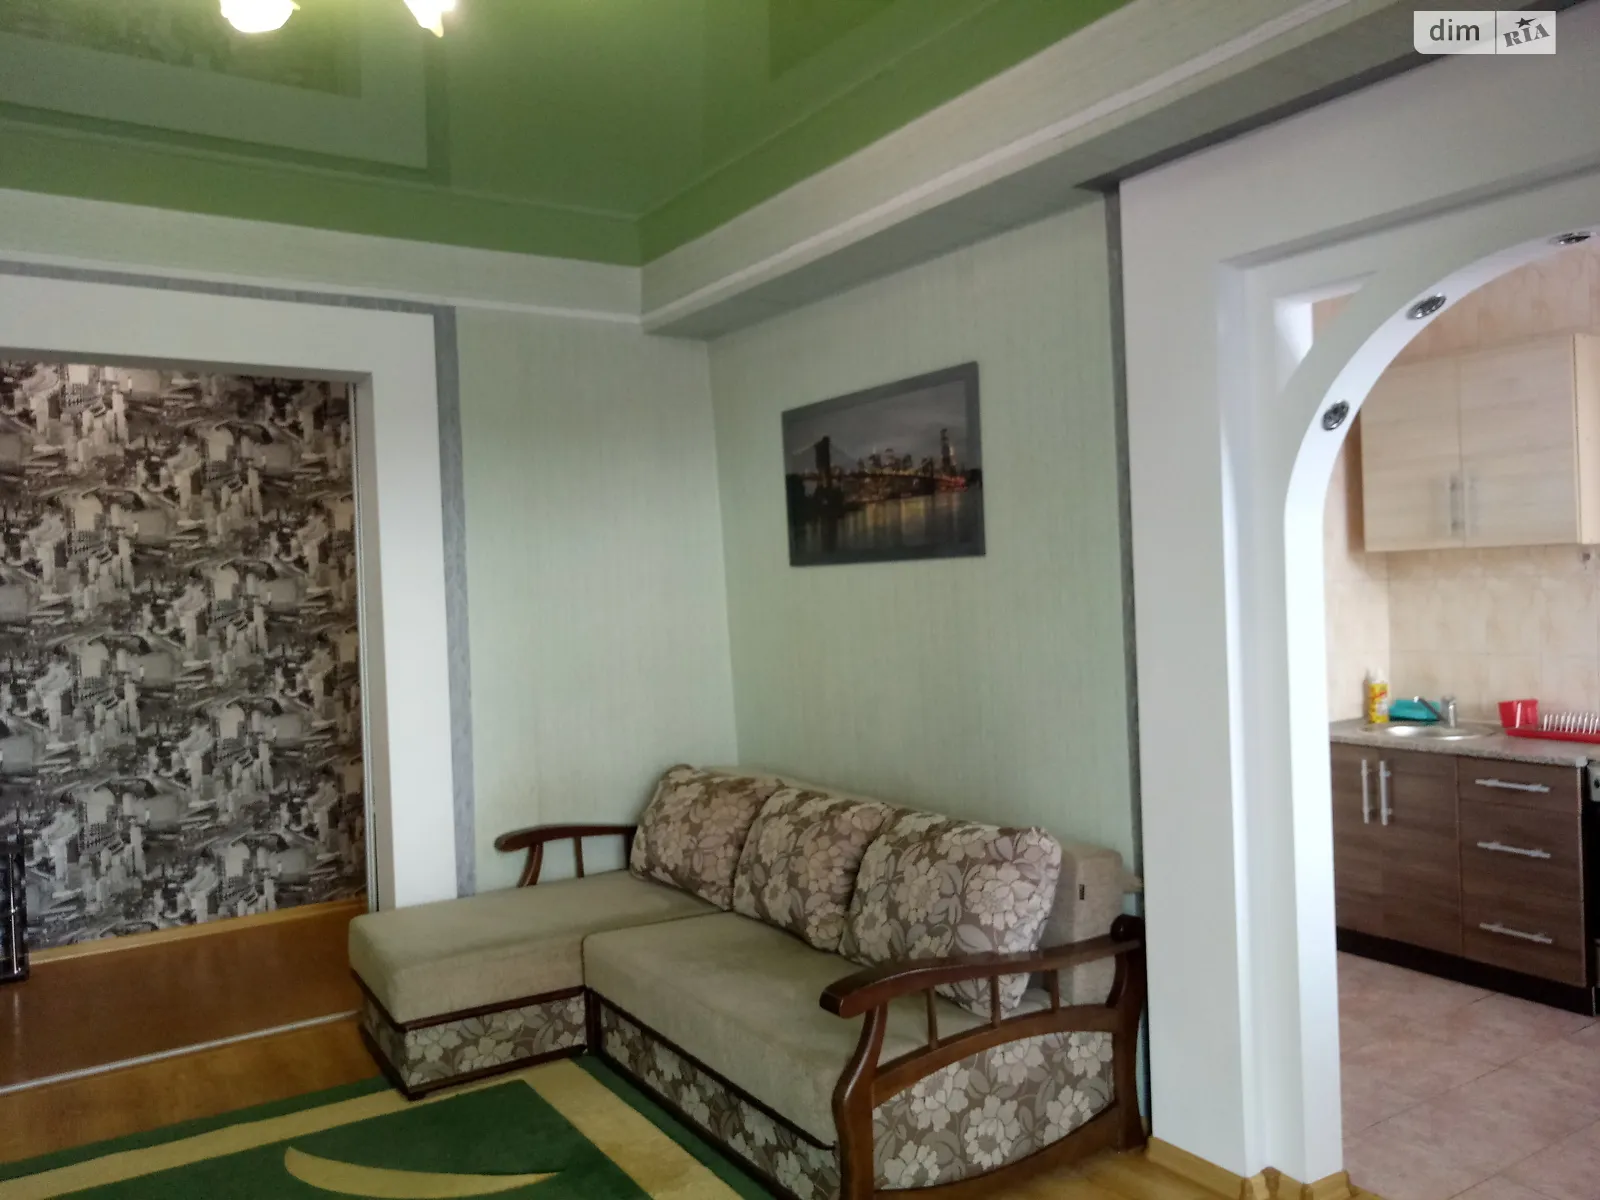 2-кімнатна квартира у Запоріжжі, цена: 1000 грн